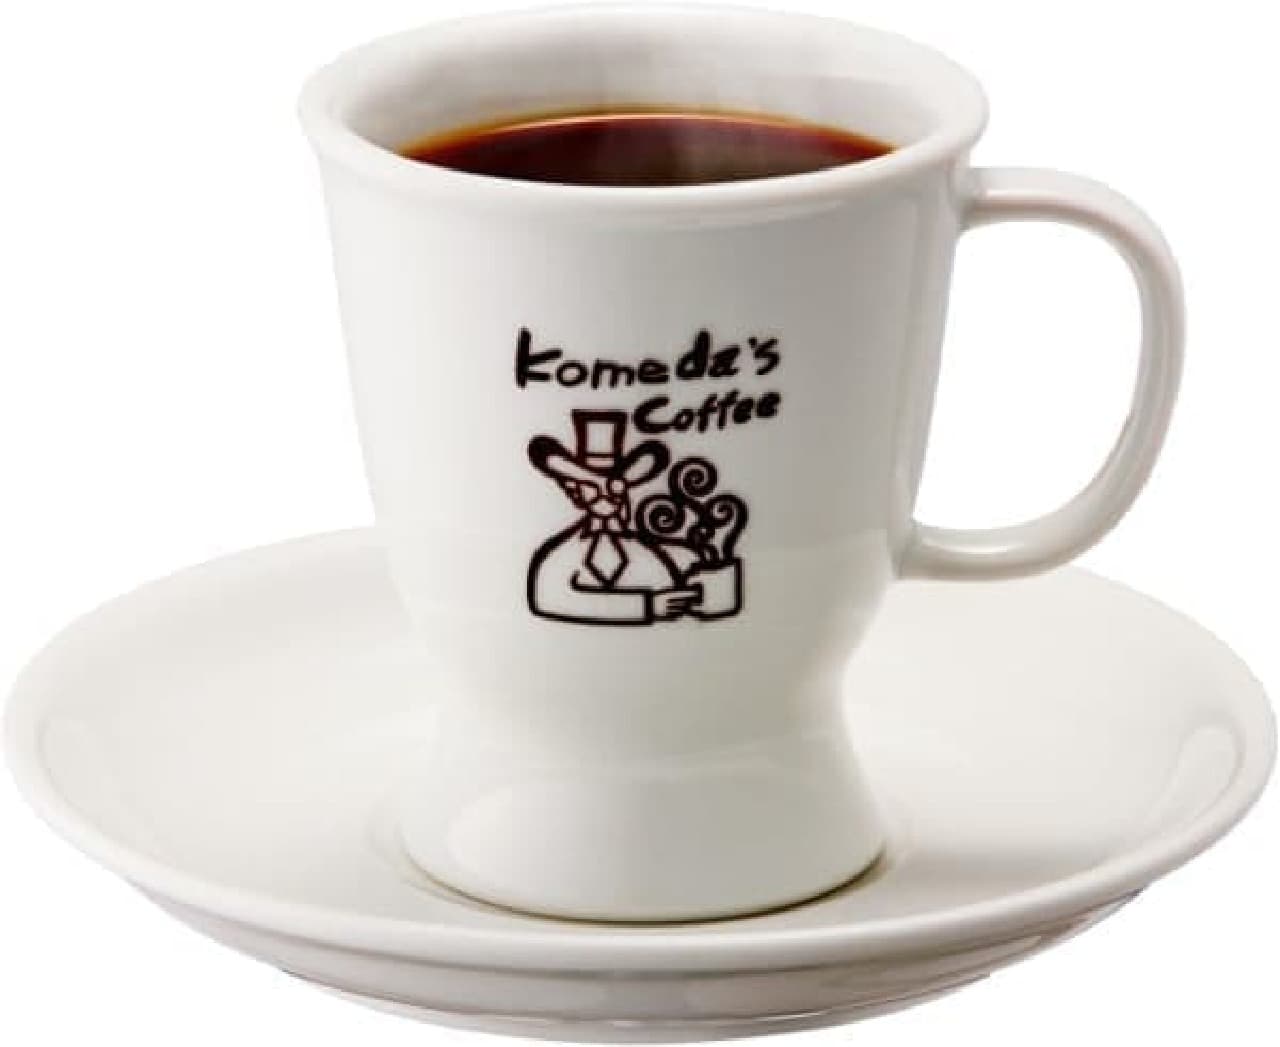 Komeda Coffee Shop "Rice Black"